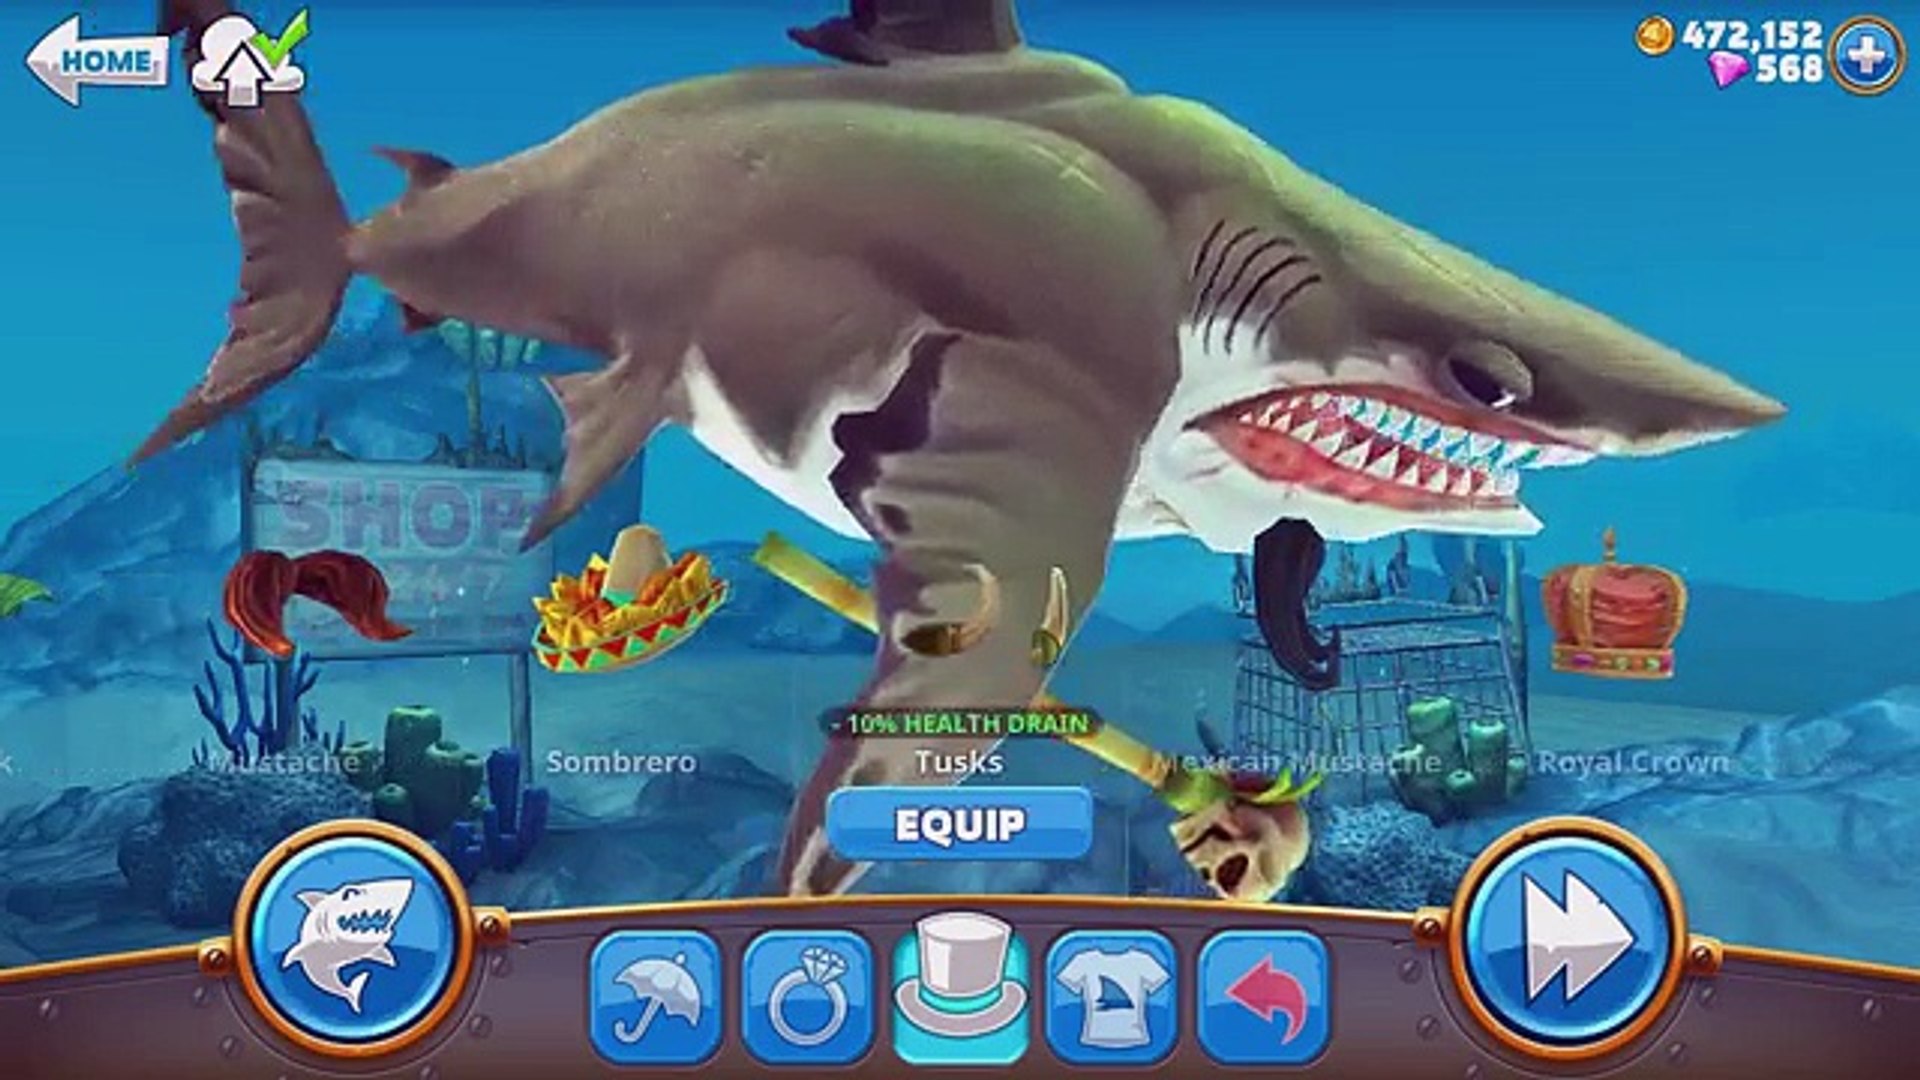 Hungry Shark World vs Hungry Shark Evolution